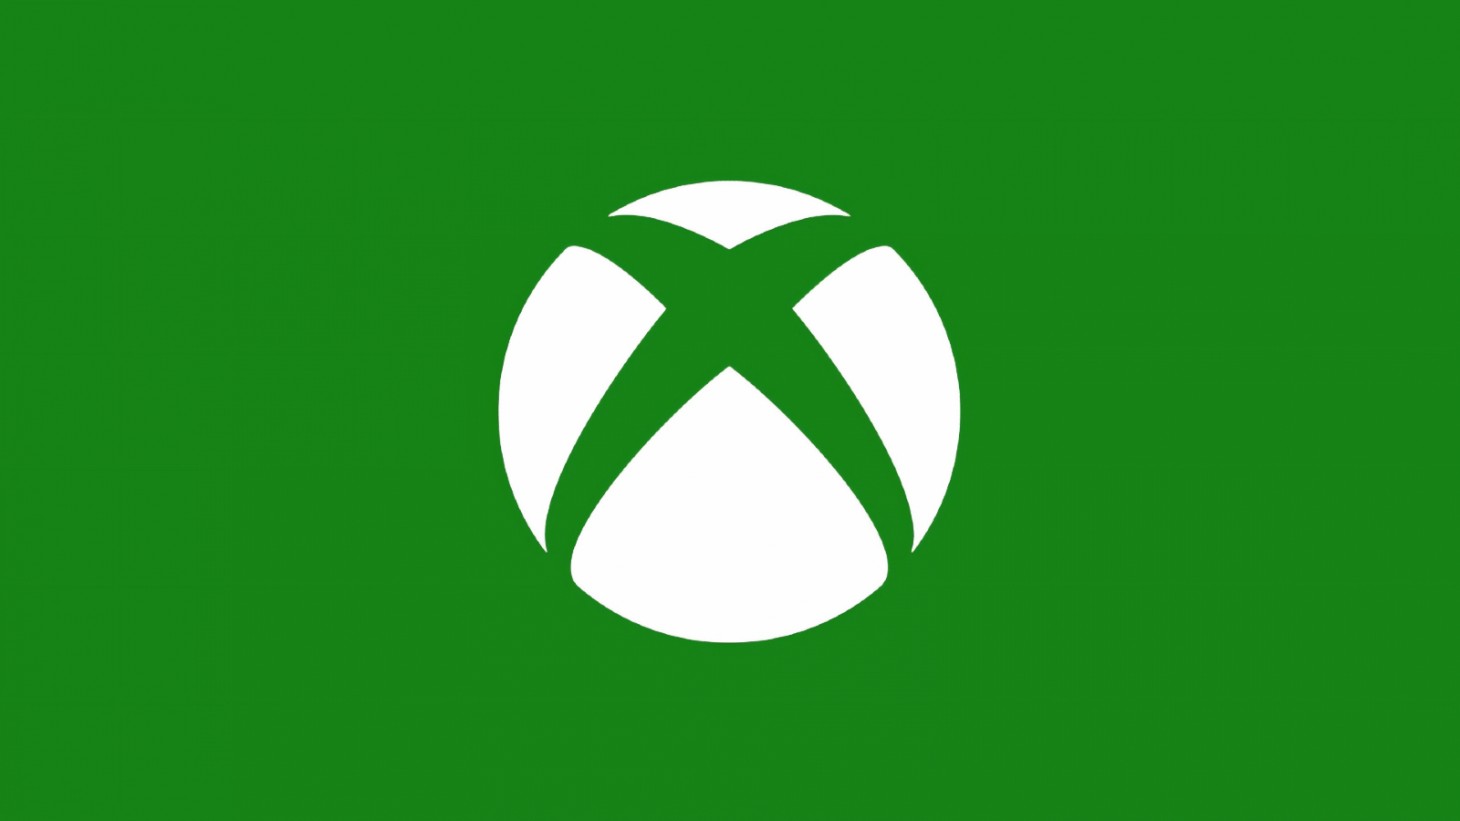 Microsoft acquisition Activision blizzard Xbox CMA UK regulatory FTC decision block prevent